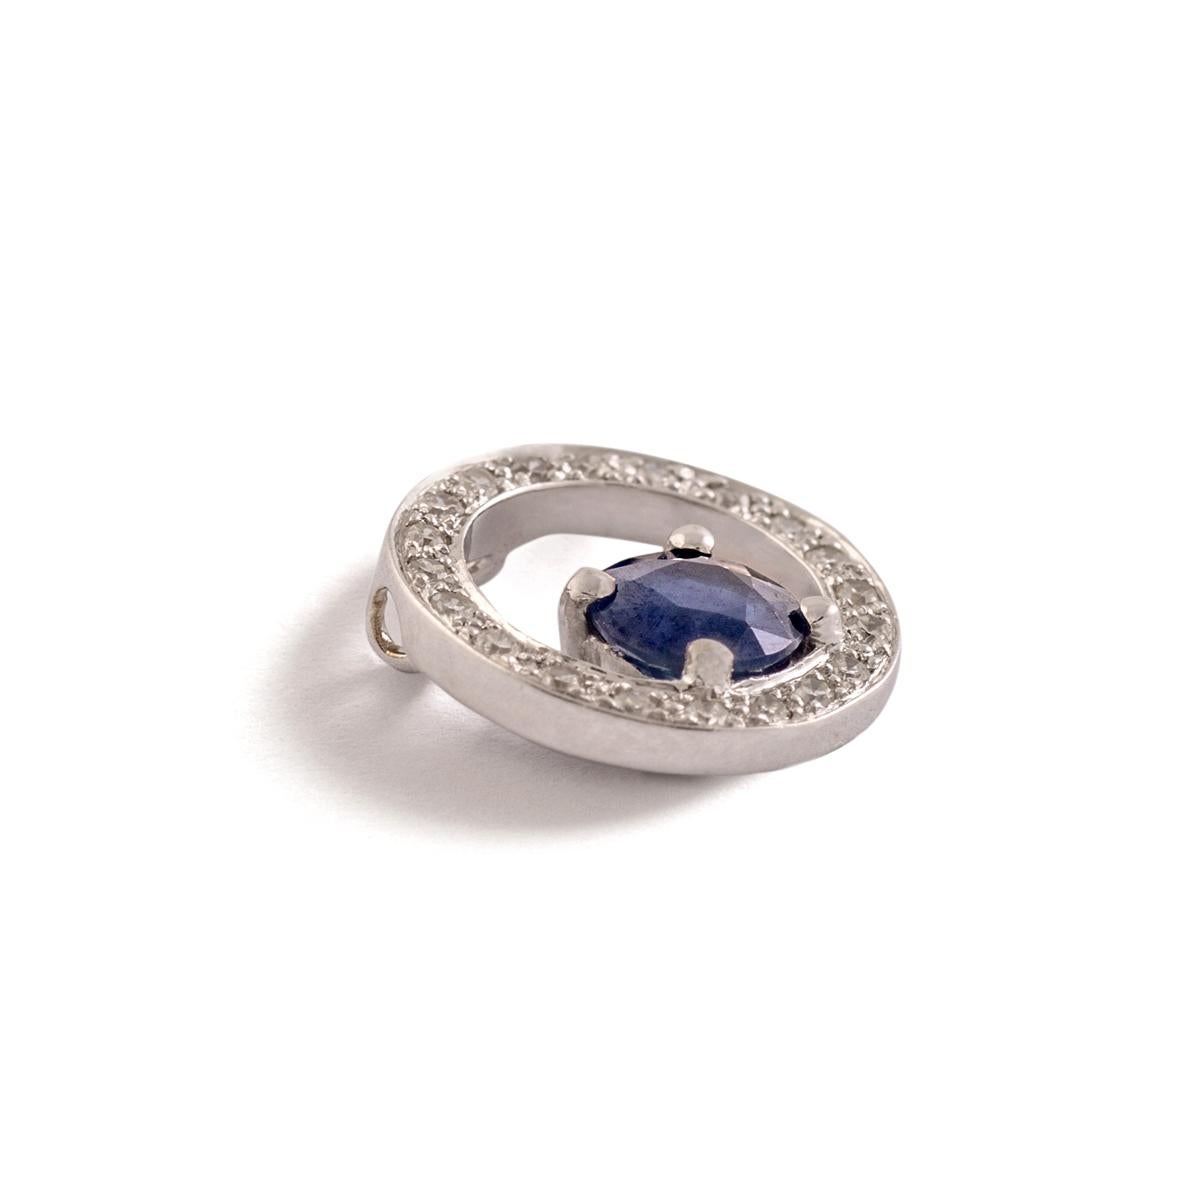 Sapphire and Diamond Circle Pendant. White gold 18K.
Sapphire Diameter: Approximately 4.79 millimeters.
Round cut Diamond Diameter: Approximately 1.10 millimeter.
Diameter: Approximately 1.90 centimeters.
Gross weight: 1.15 gram.

